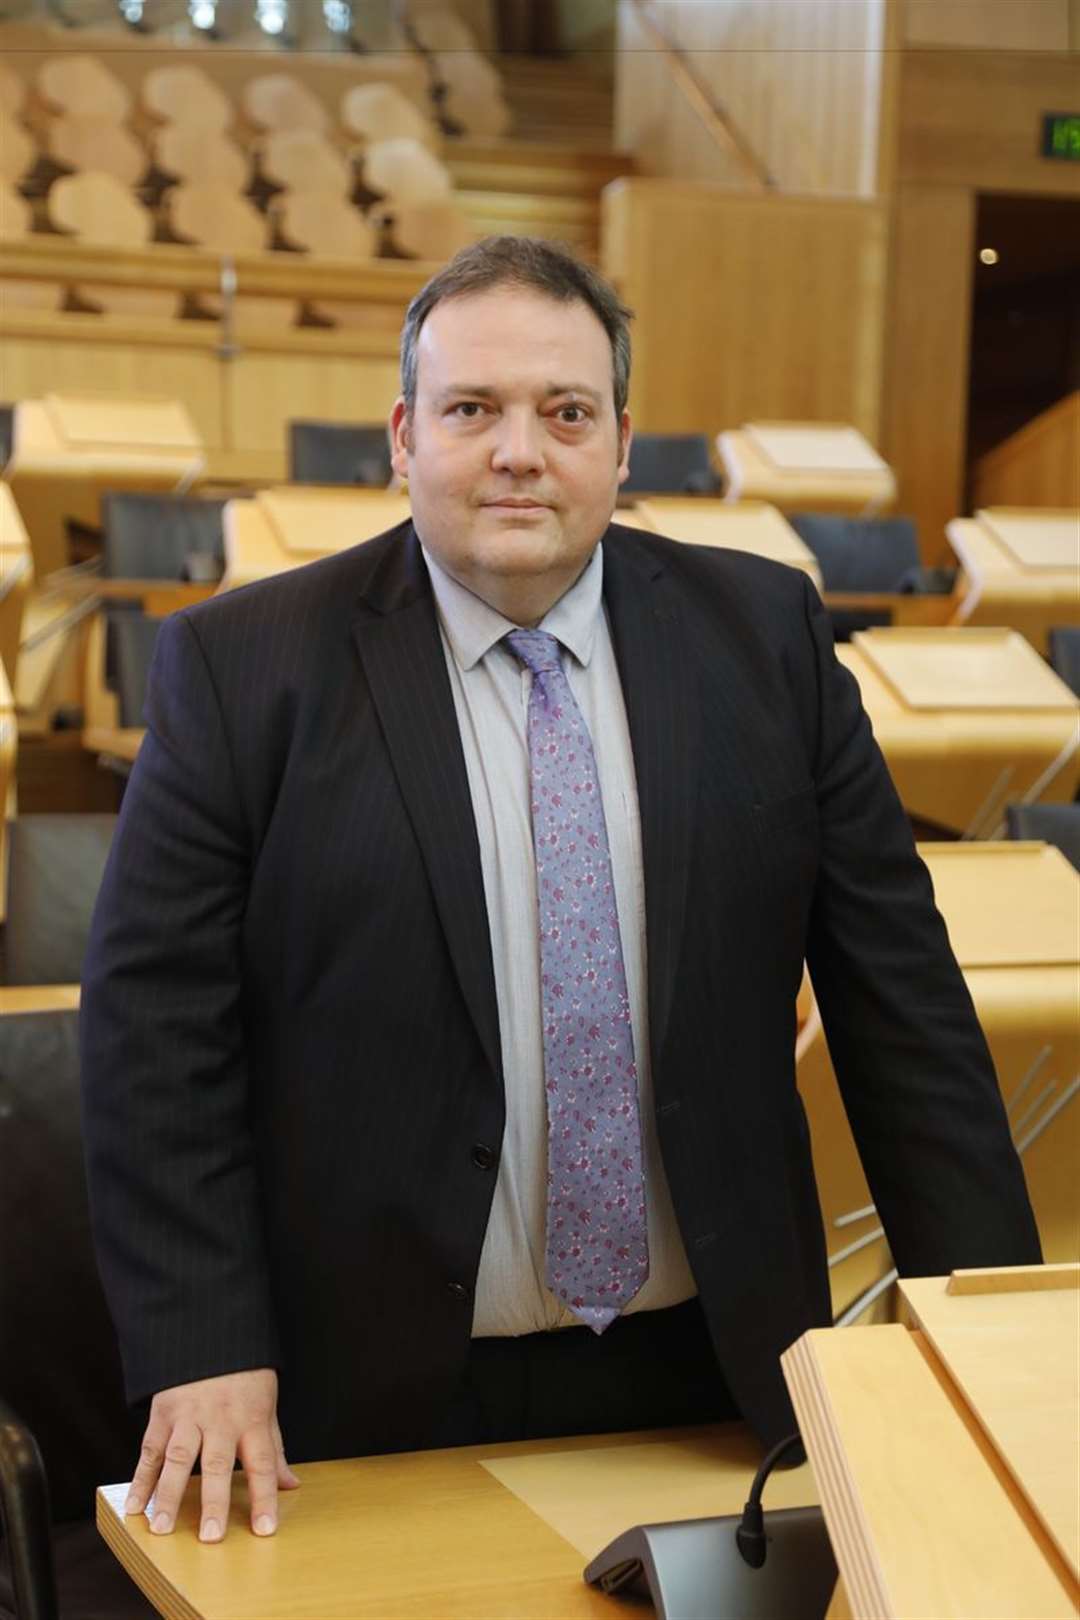 Jamie Halcro Johnston MSP 26 June 2019. Pic - Andrew Cowan/Scottish Parliament.